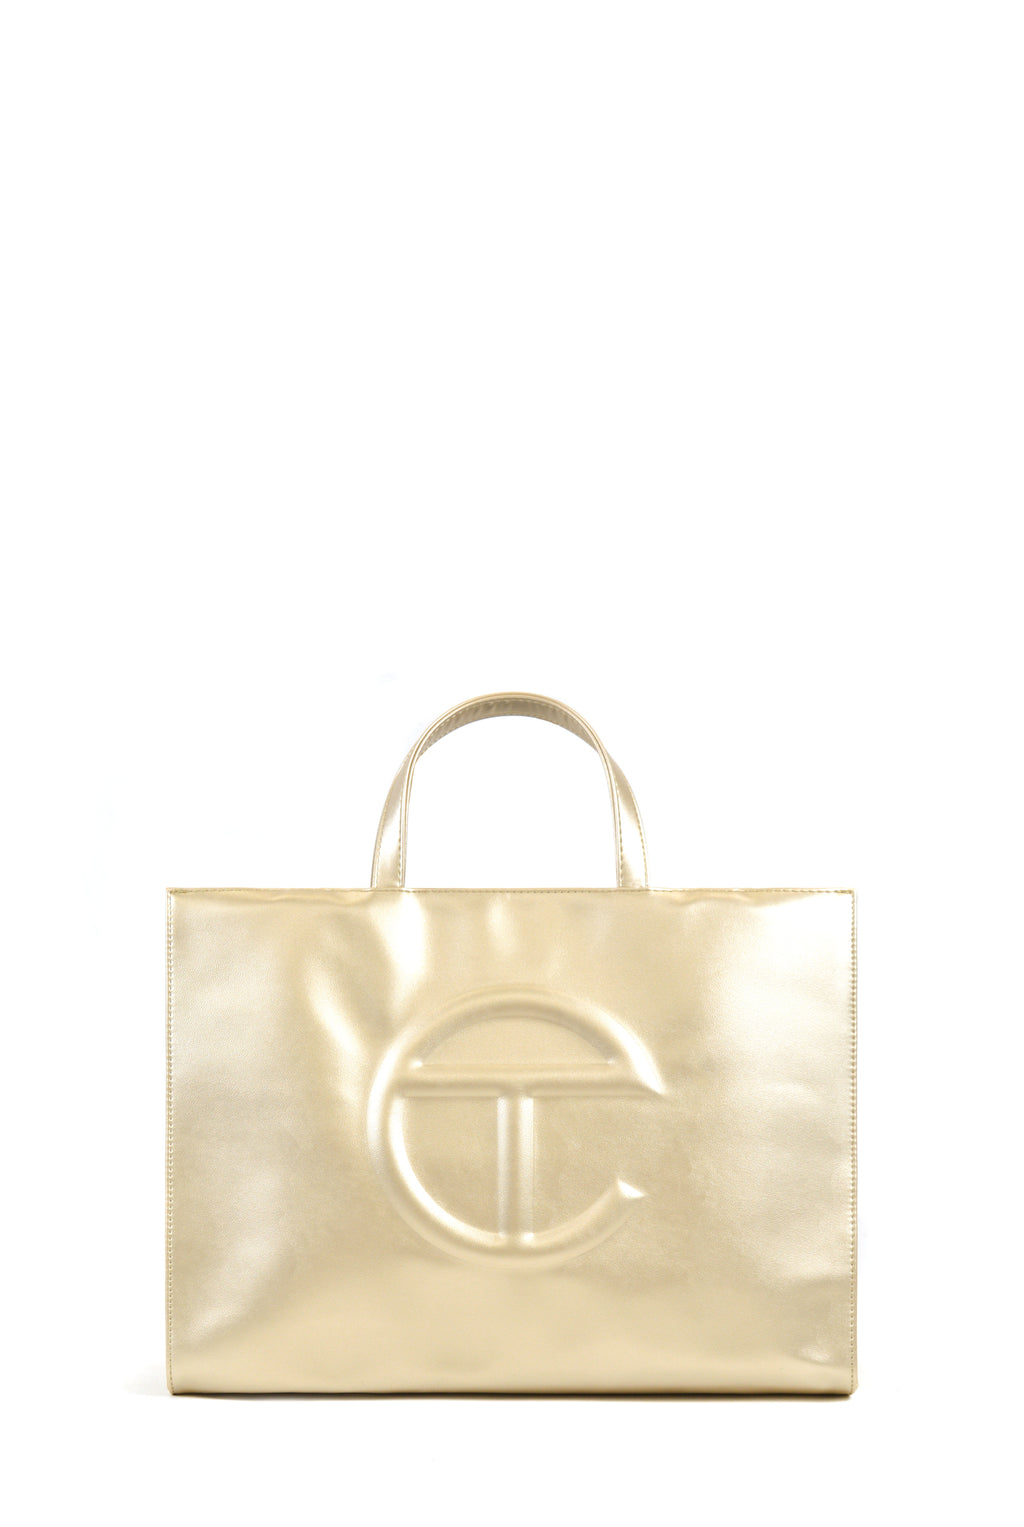 Telfar Medium Shopping Bag, Gold